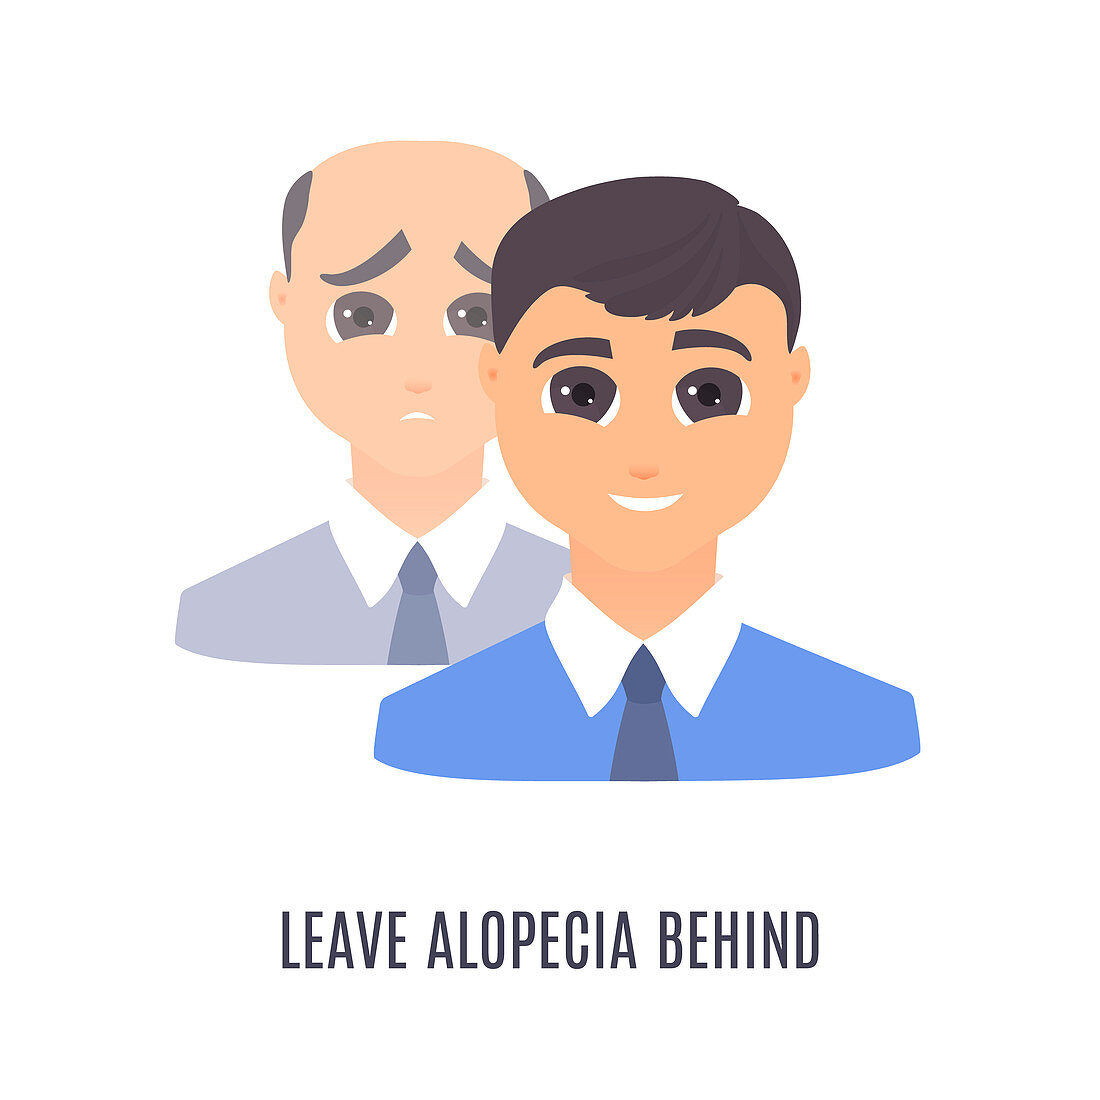 Male alopecia treatment, conceptual illustration